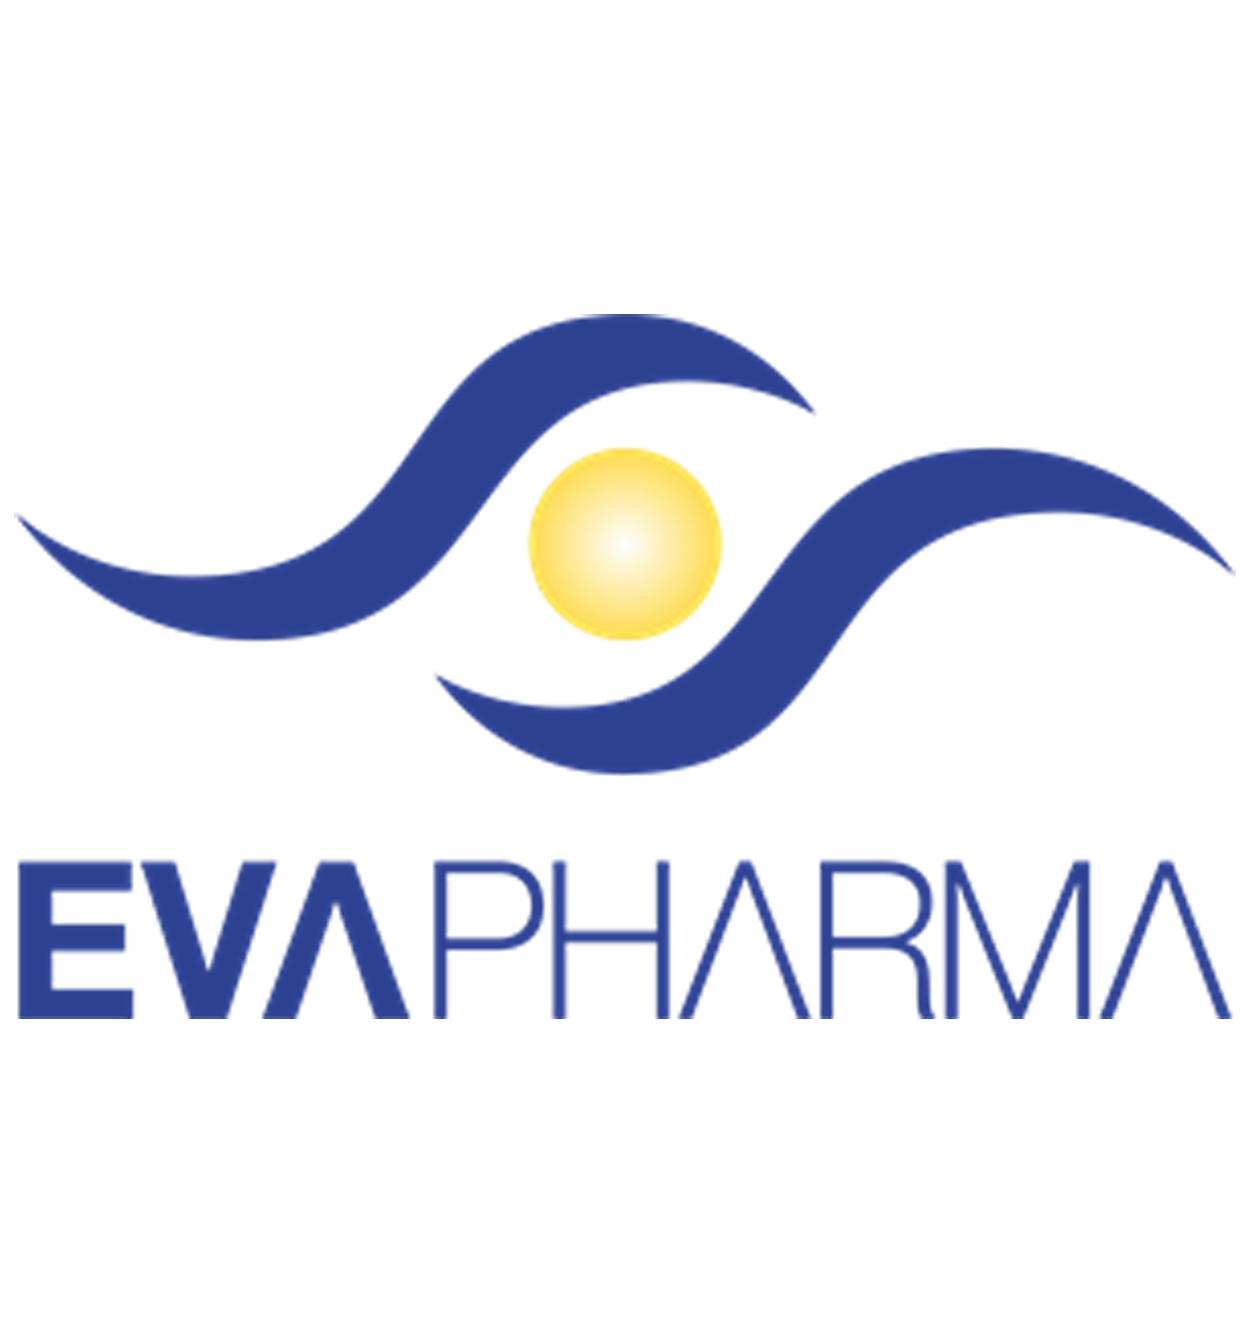 Evapharma